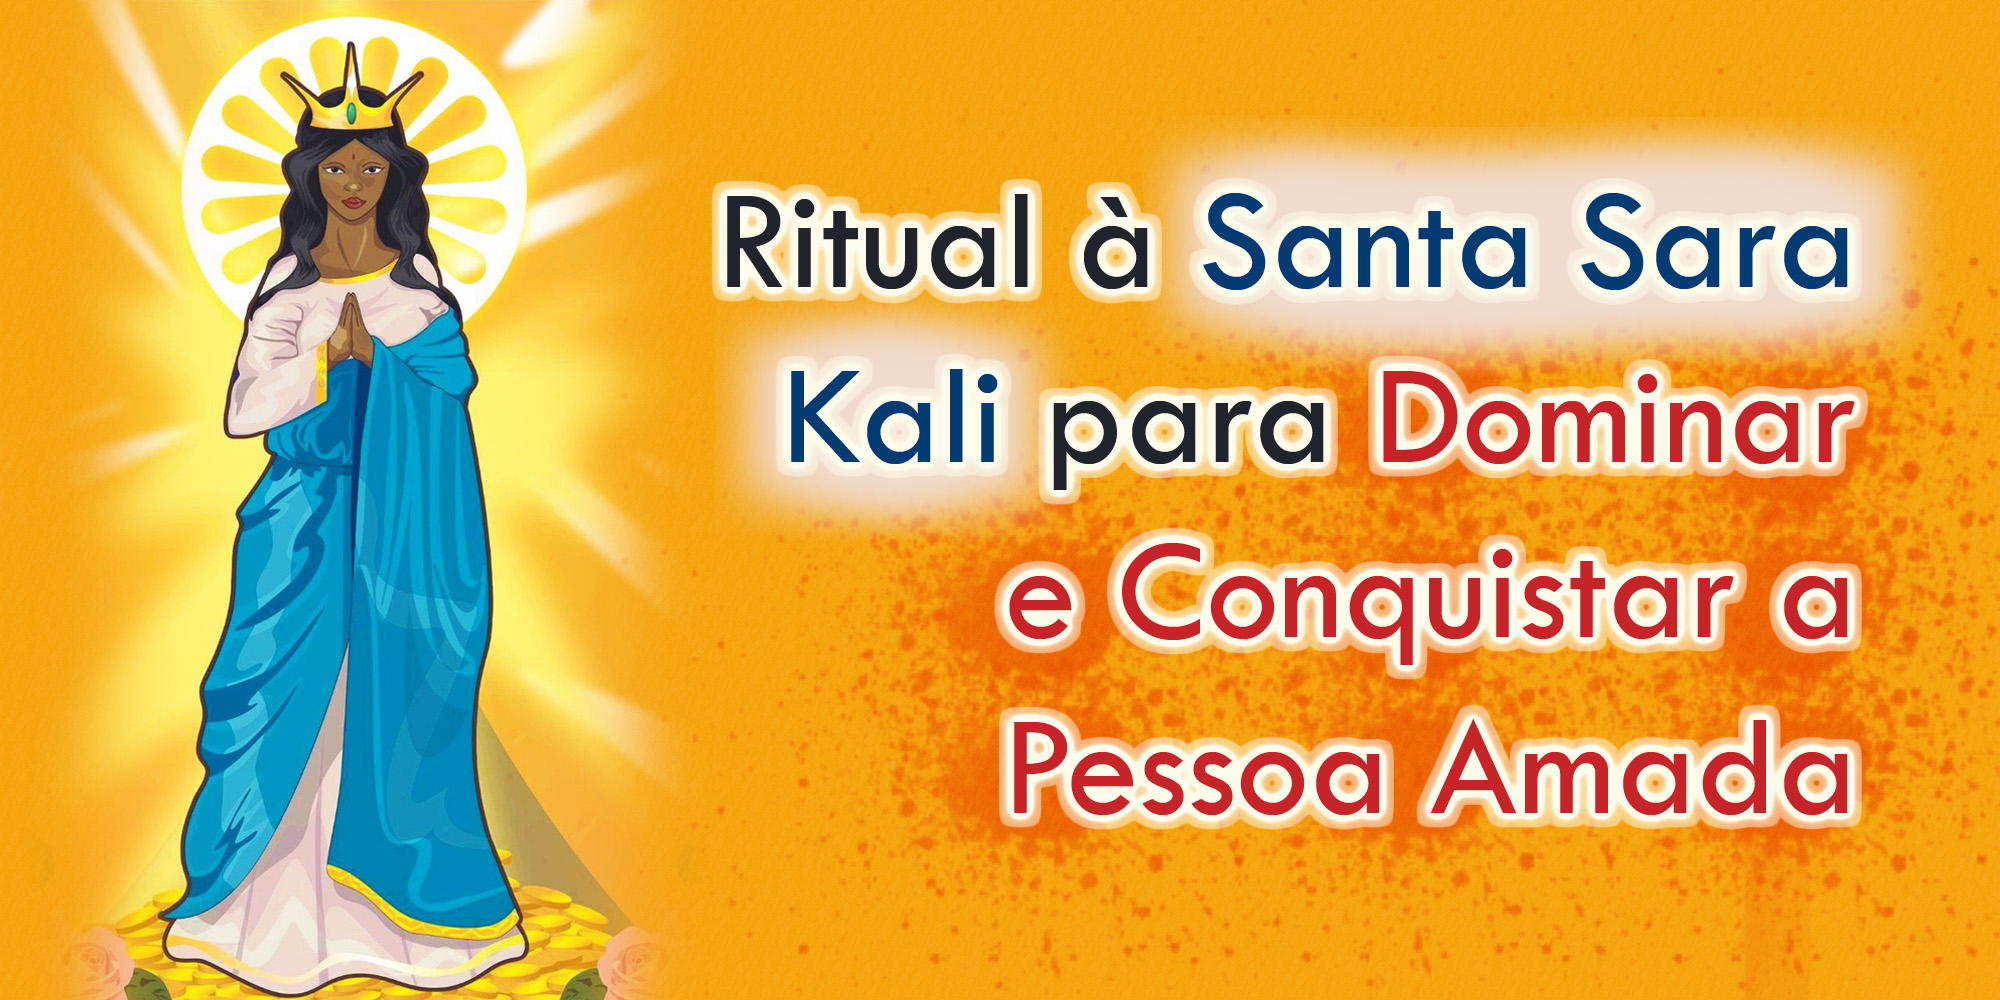 Ritual para Santa Sara Kali para Dominar e Conquistar a Pessoa Amada